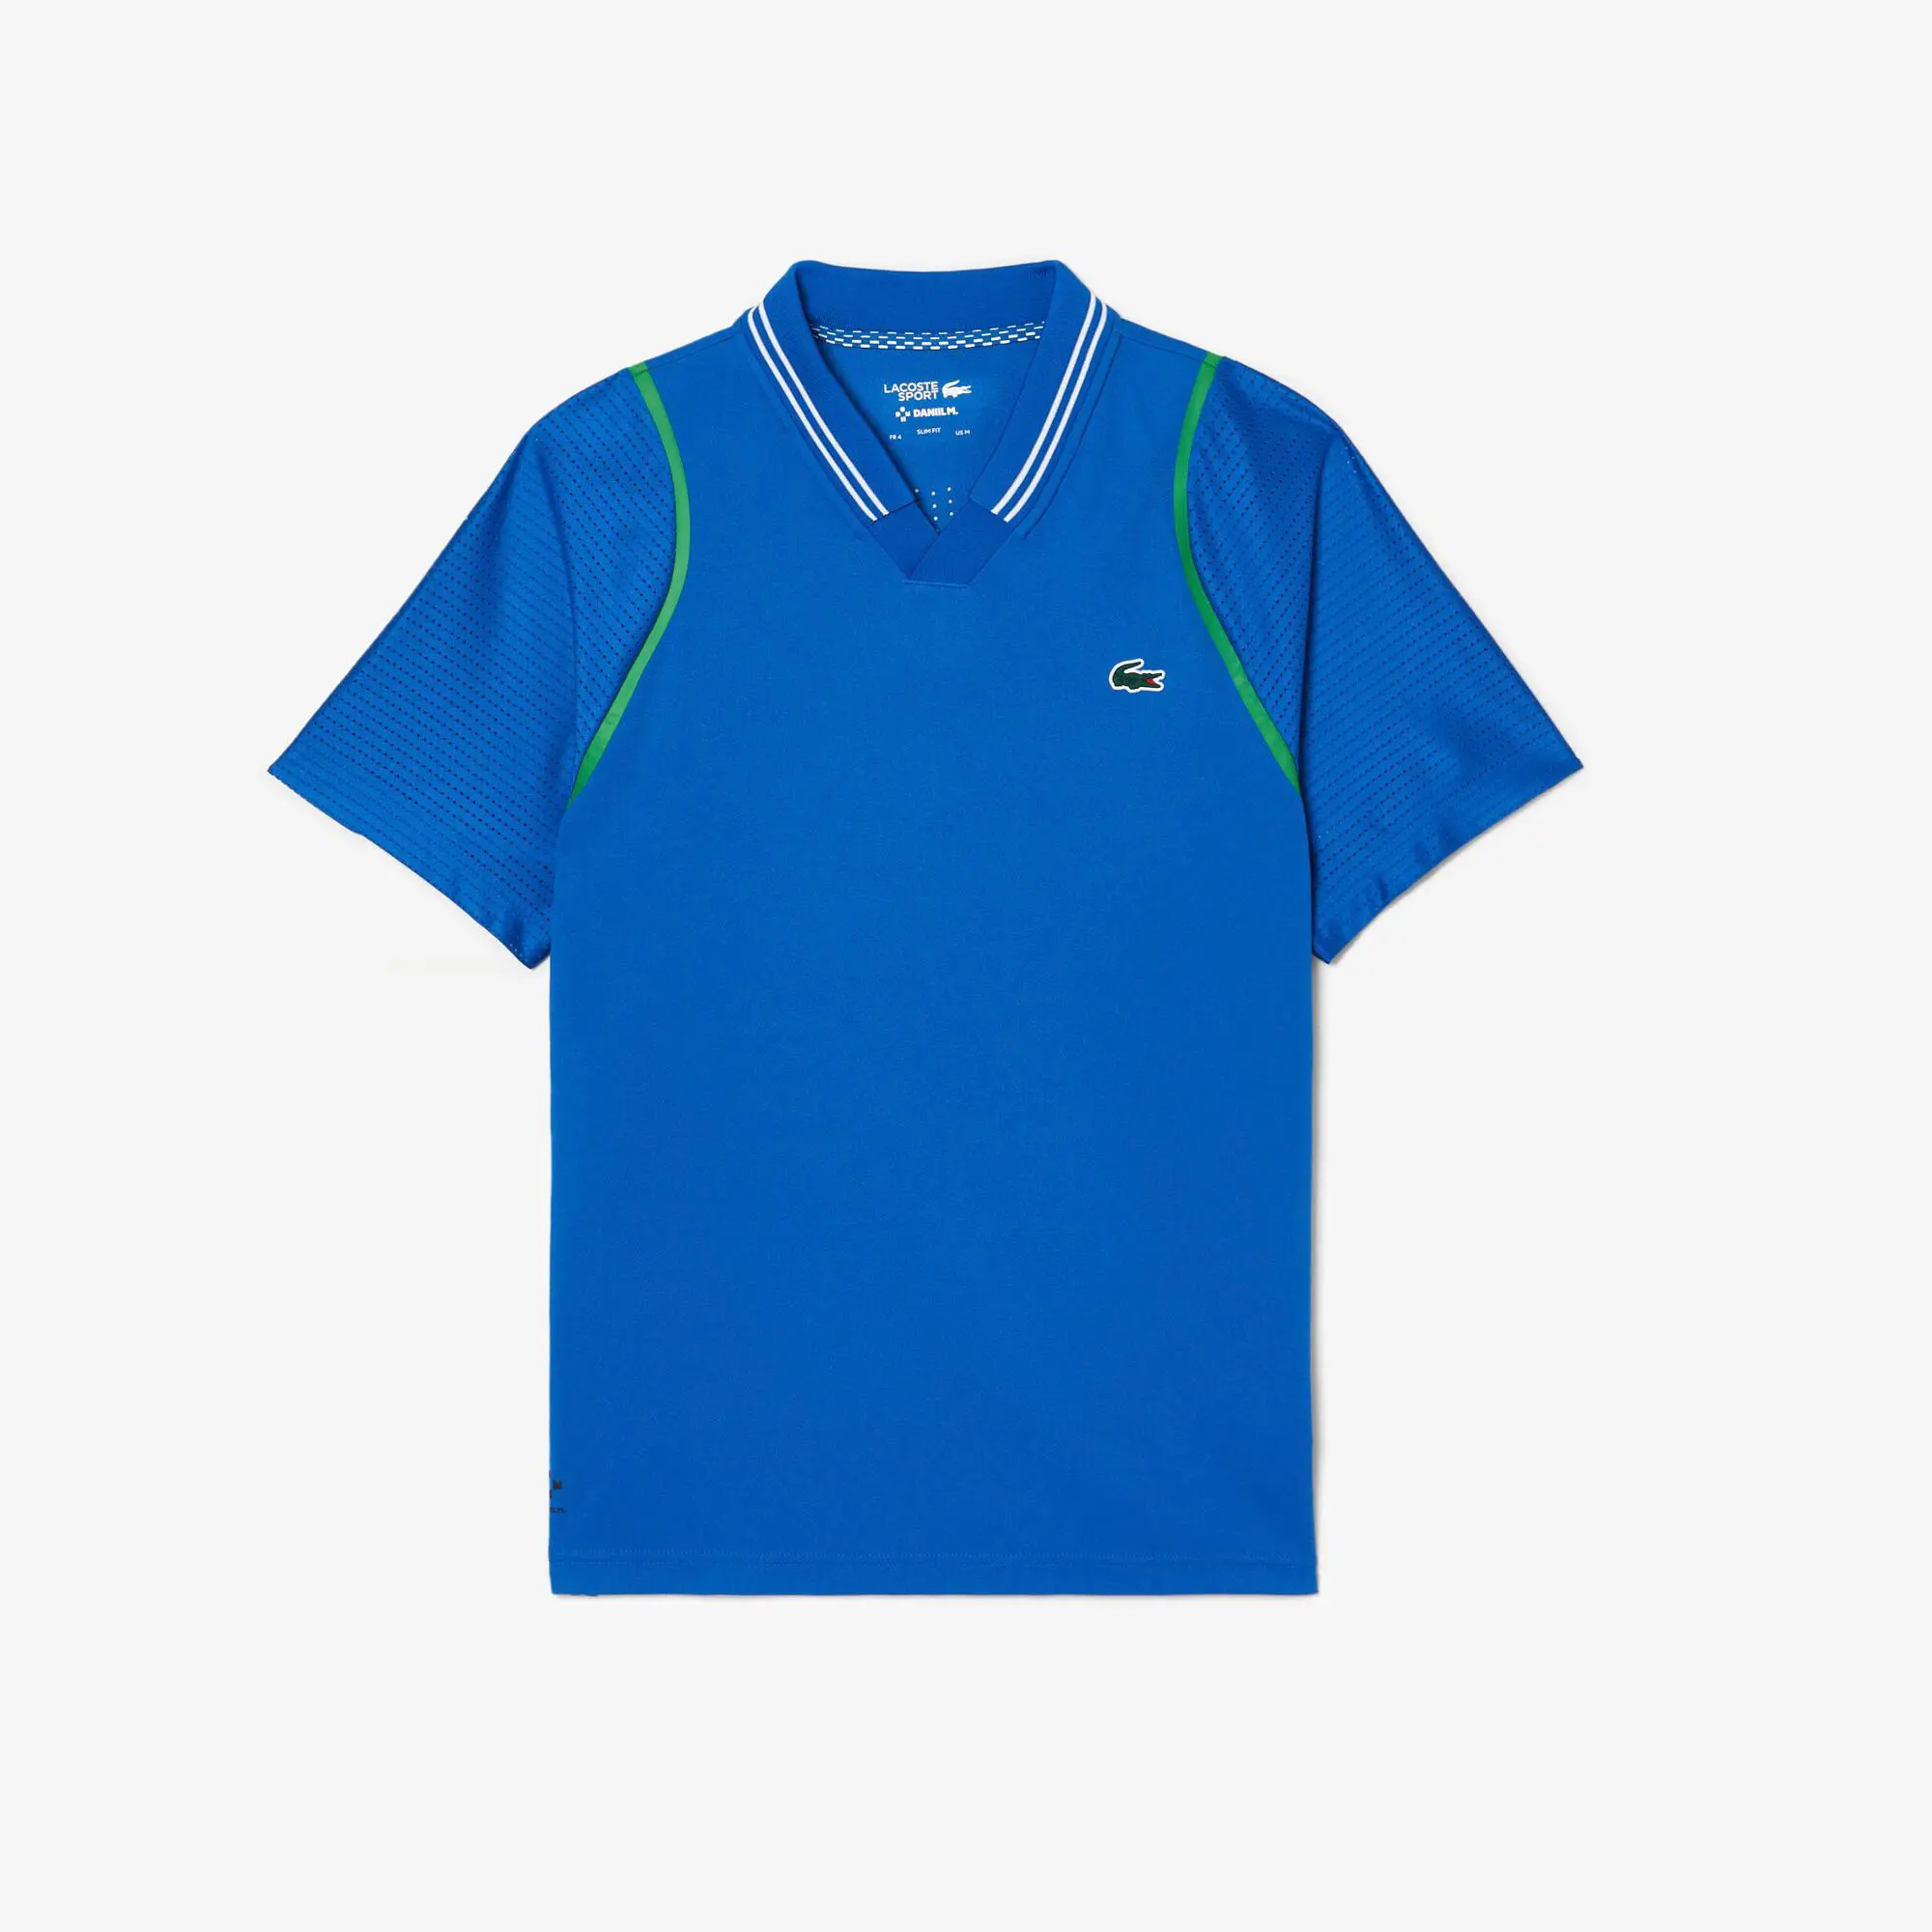 Lacoste Men’s Lacoste Tennis x Daniil Medvedev Polo Shirt. 2